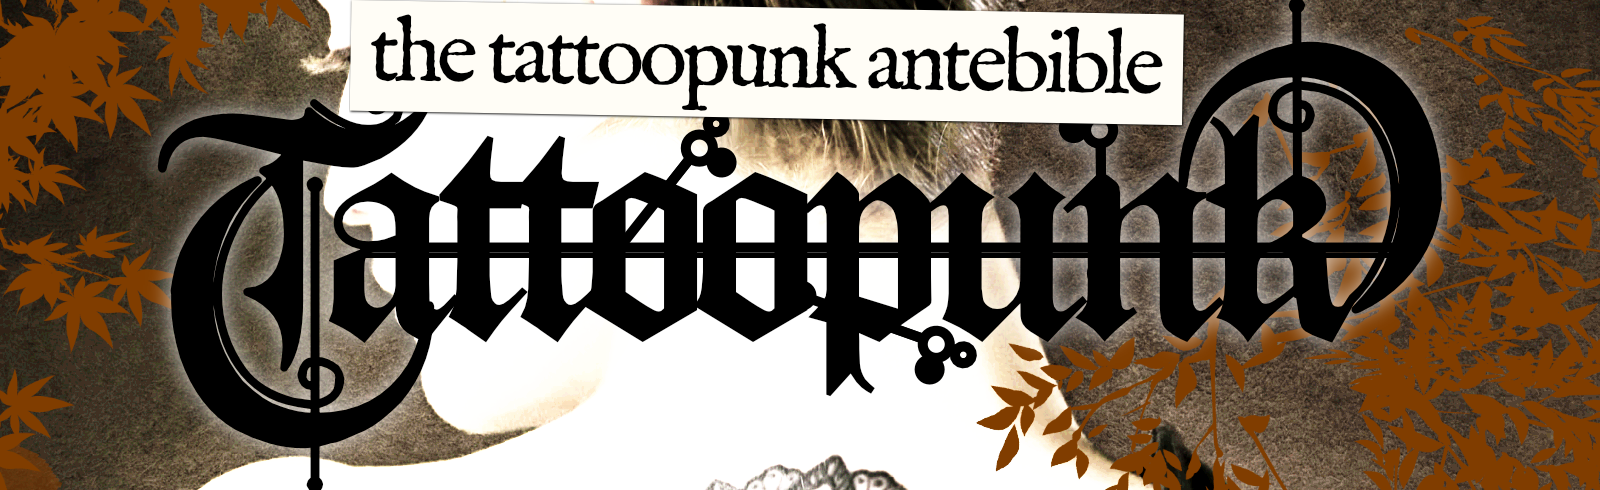 The Tattoopunk Antebible